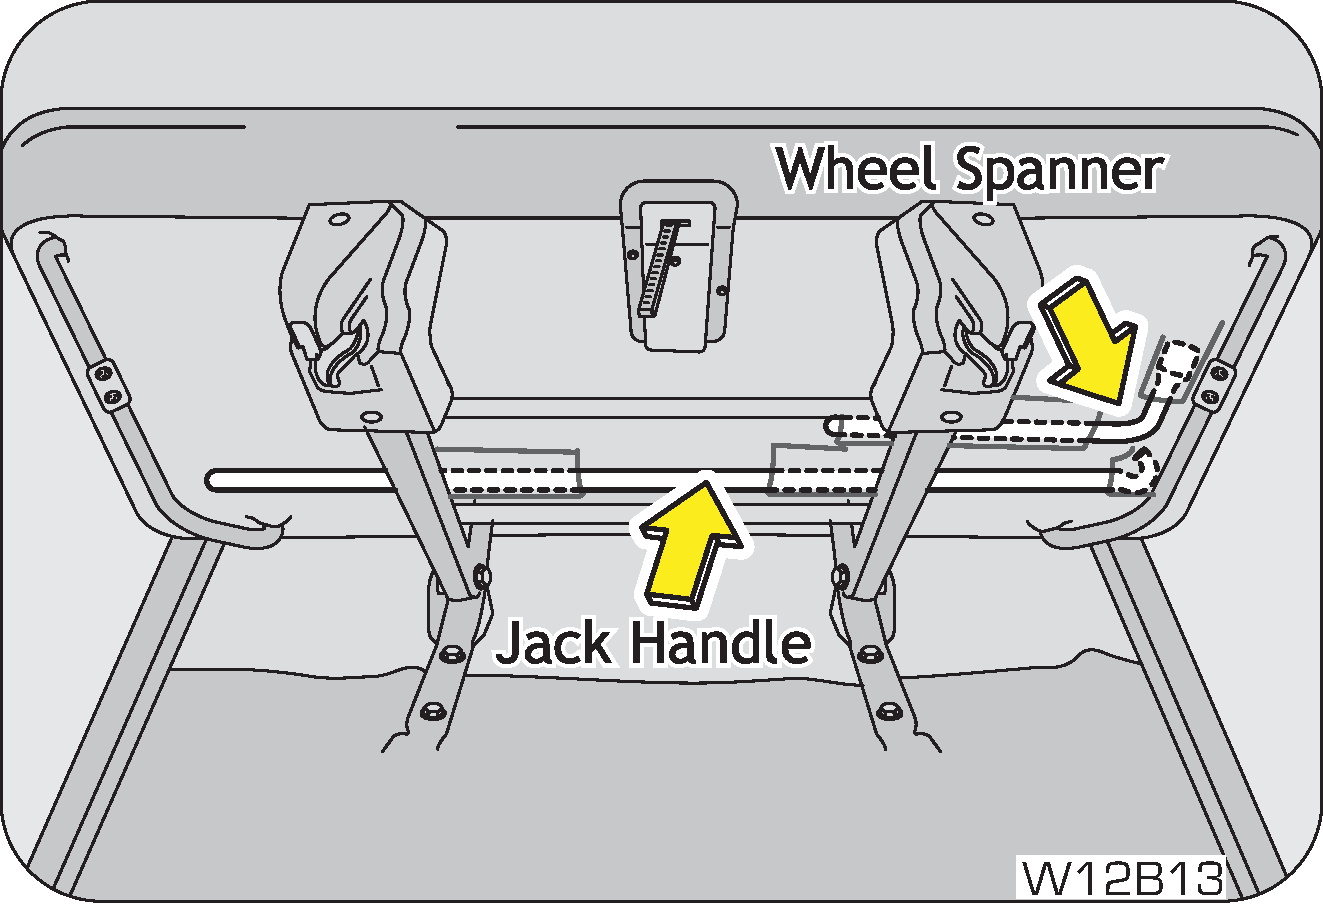 Jack Wheel